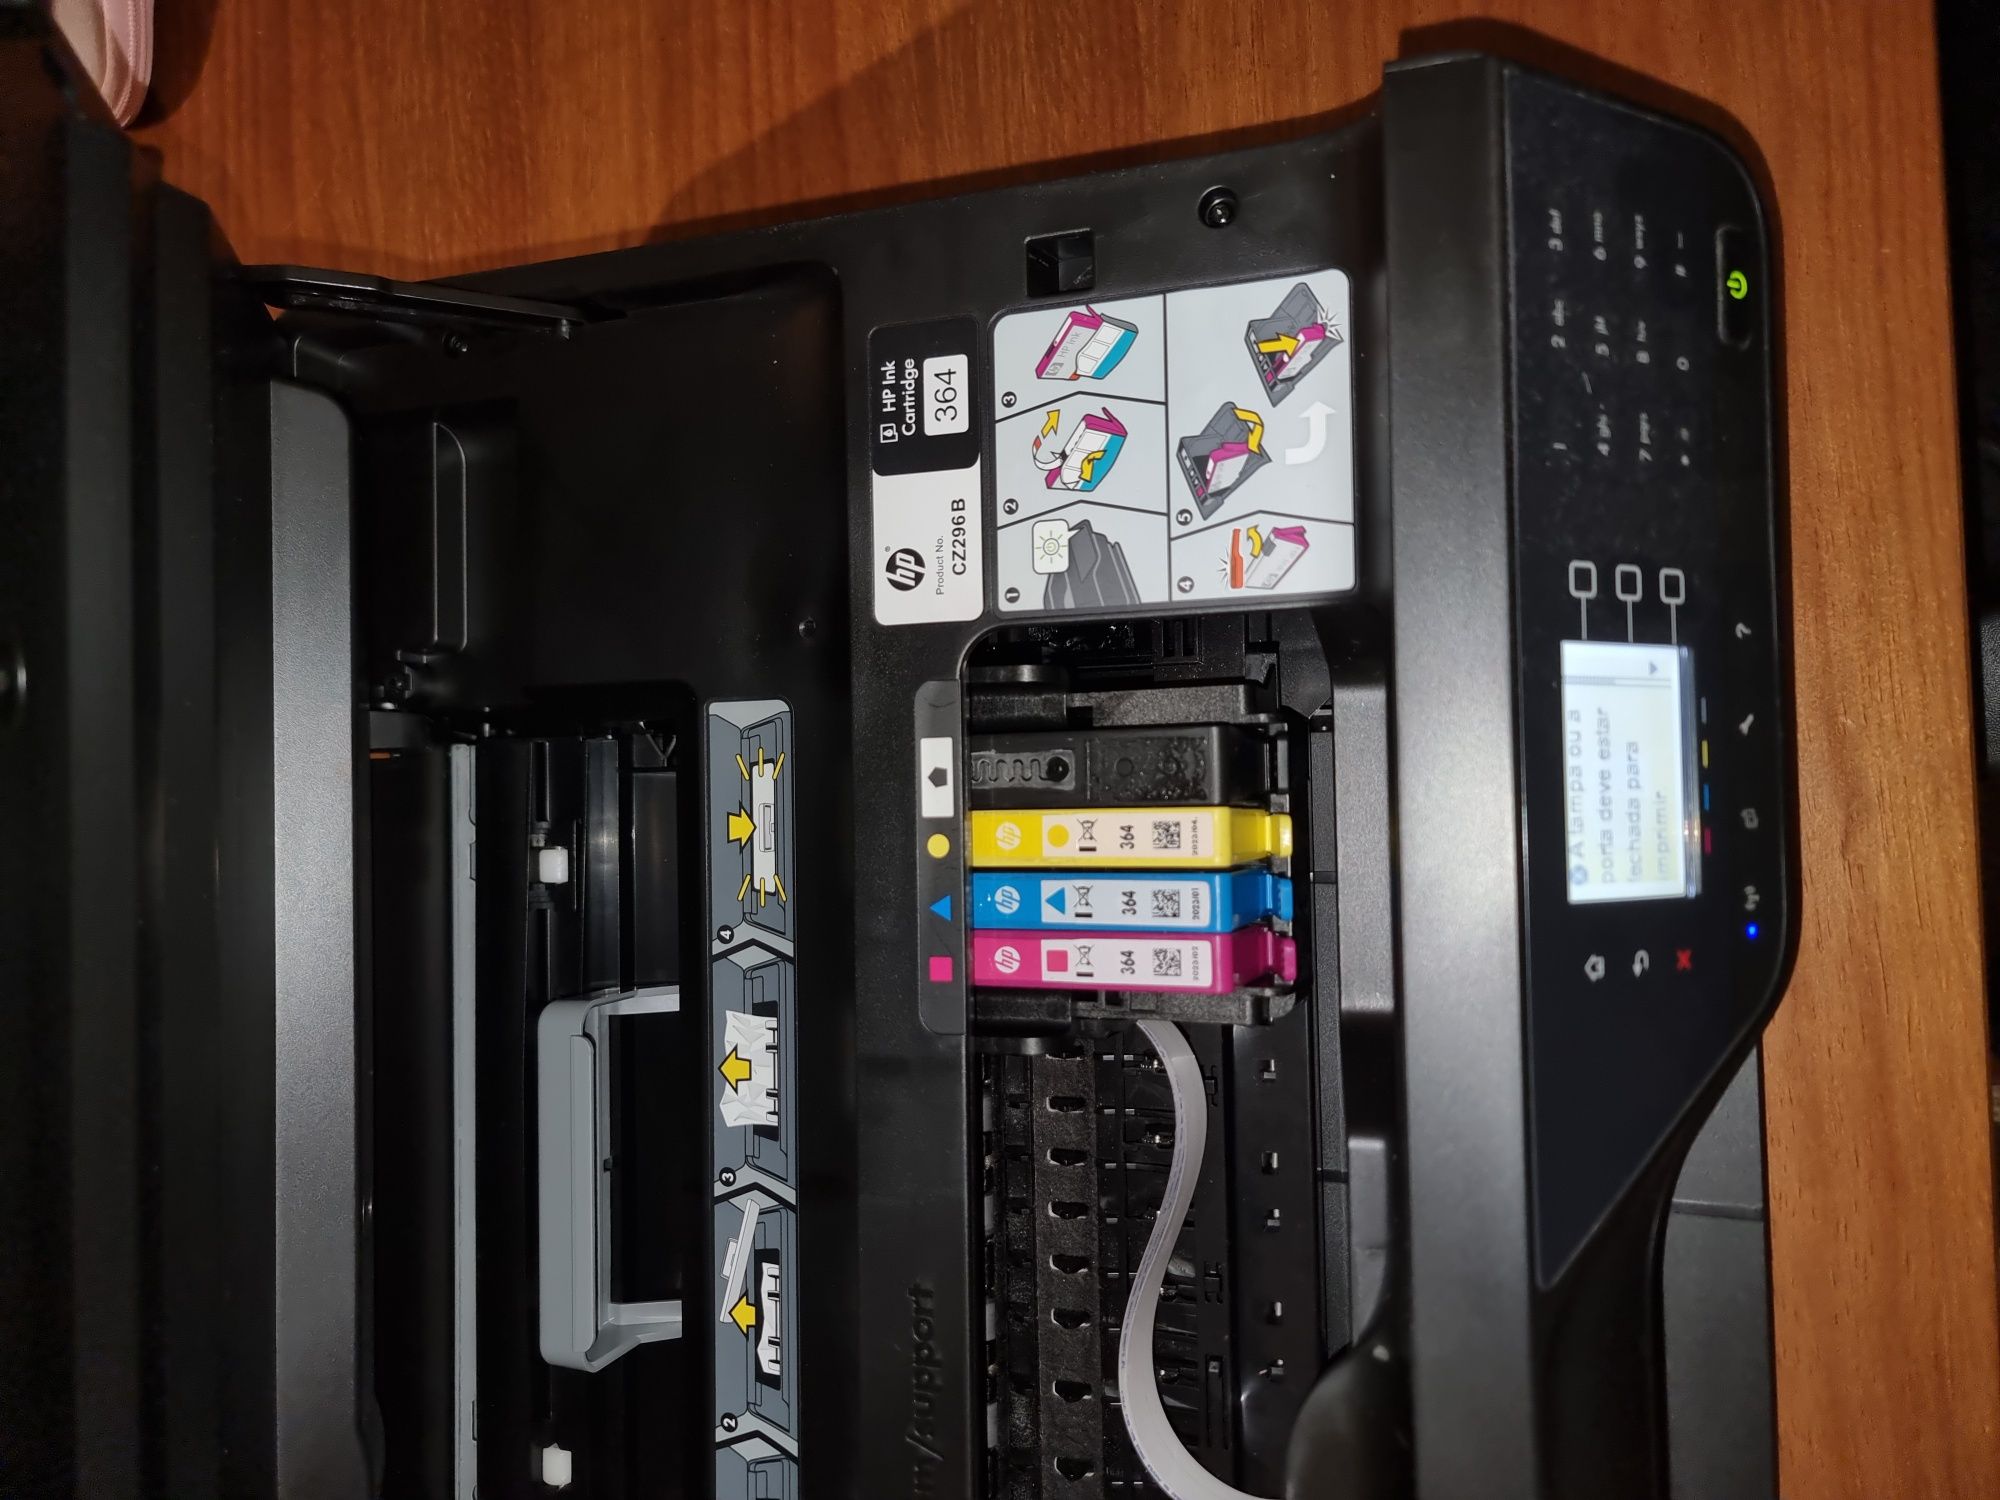 Impressora HP officejet 4622